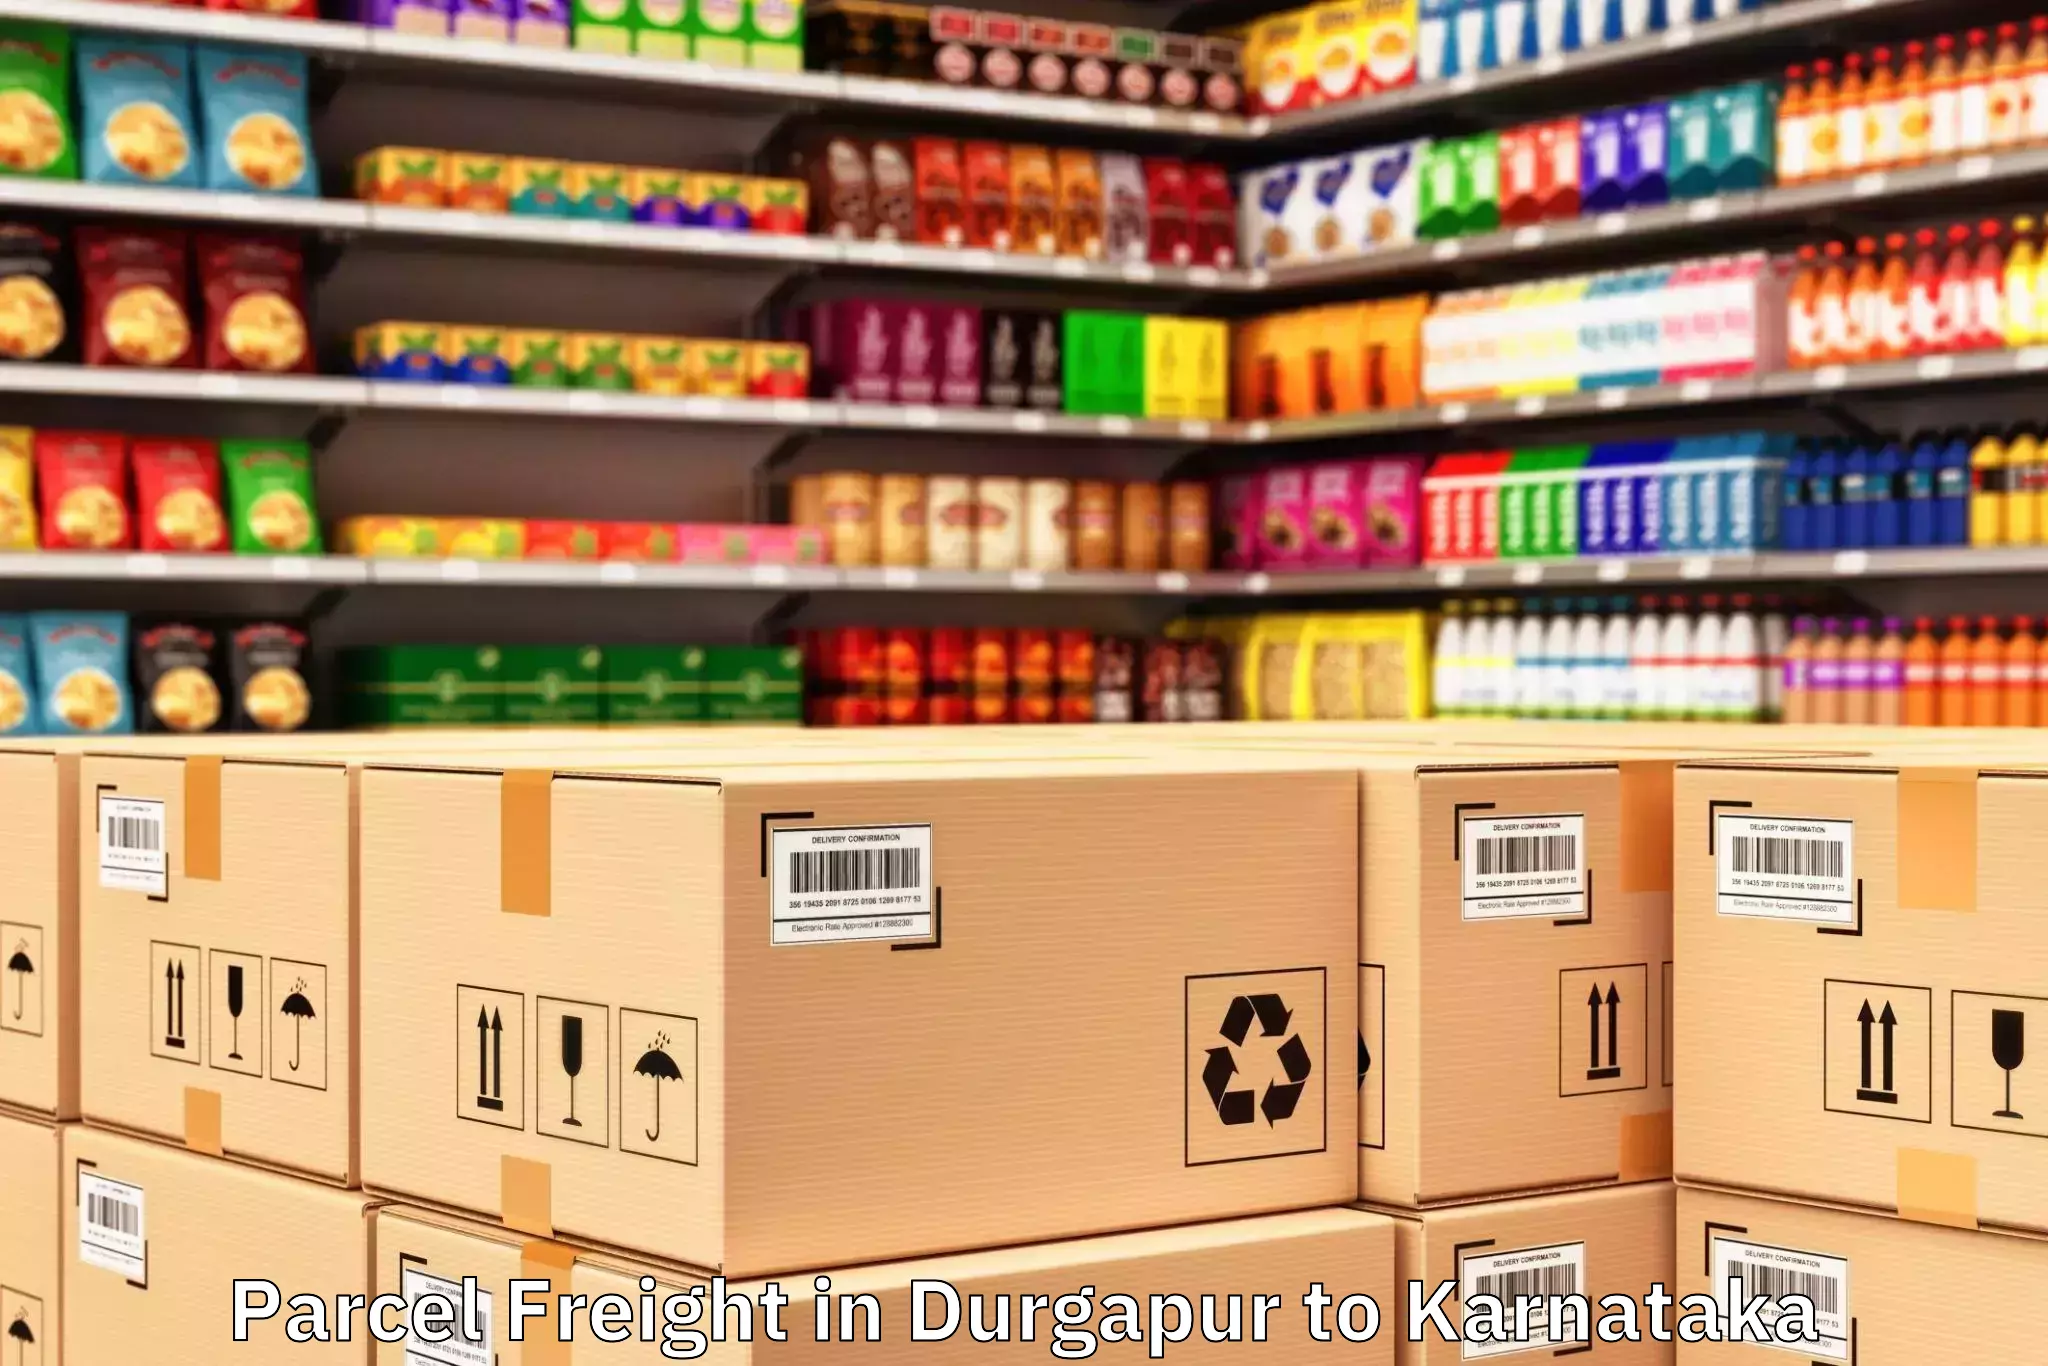 Professional Durgapur to Rai Technology University Doddaballapura Parcel Freight